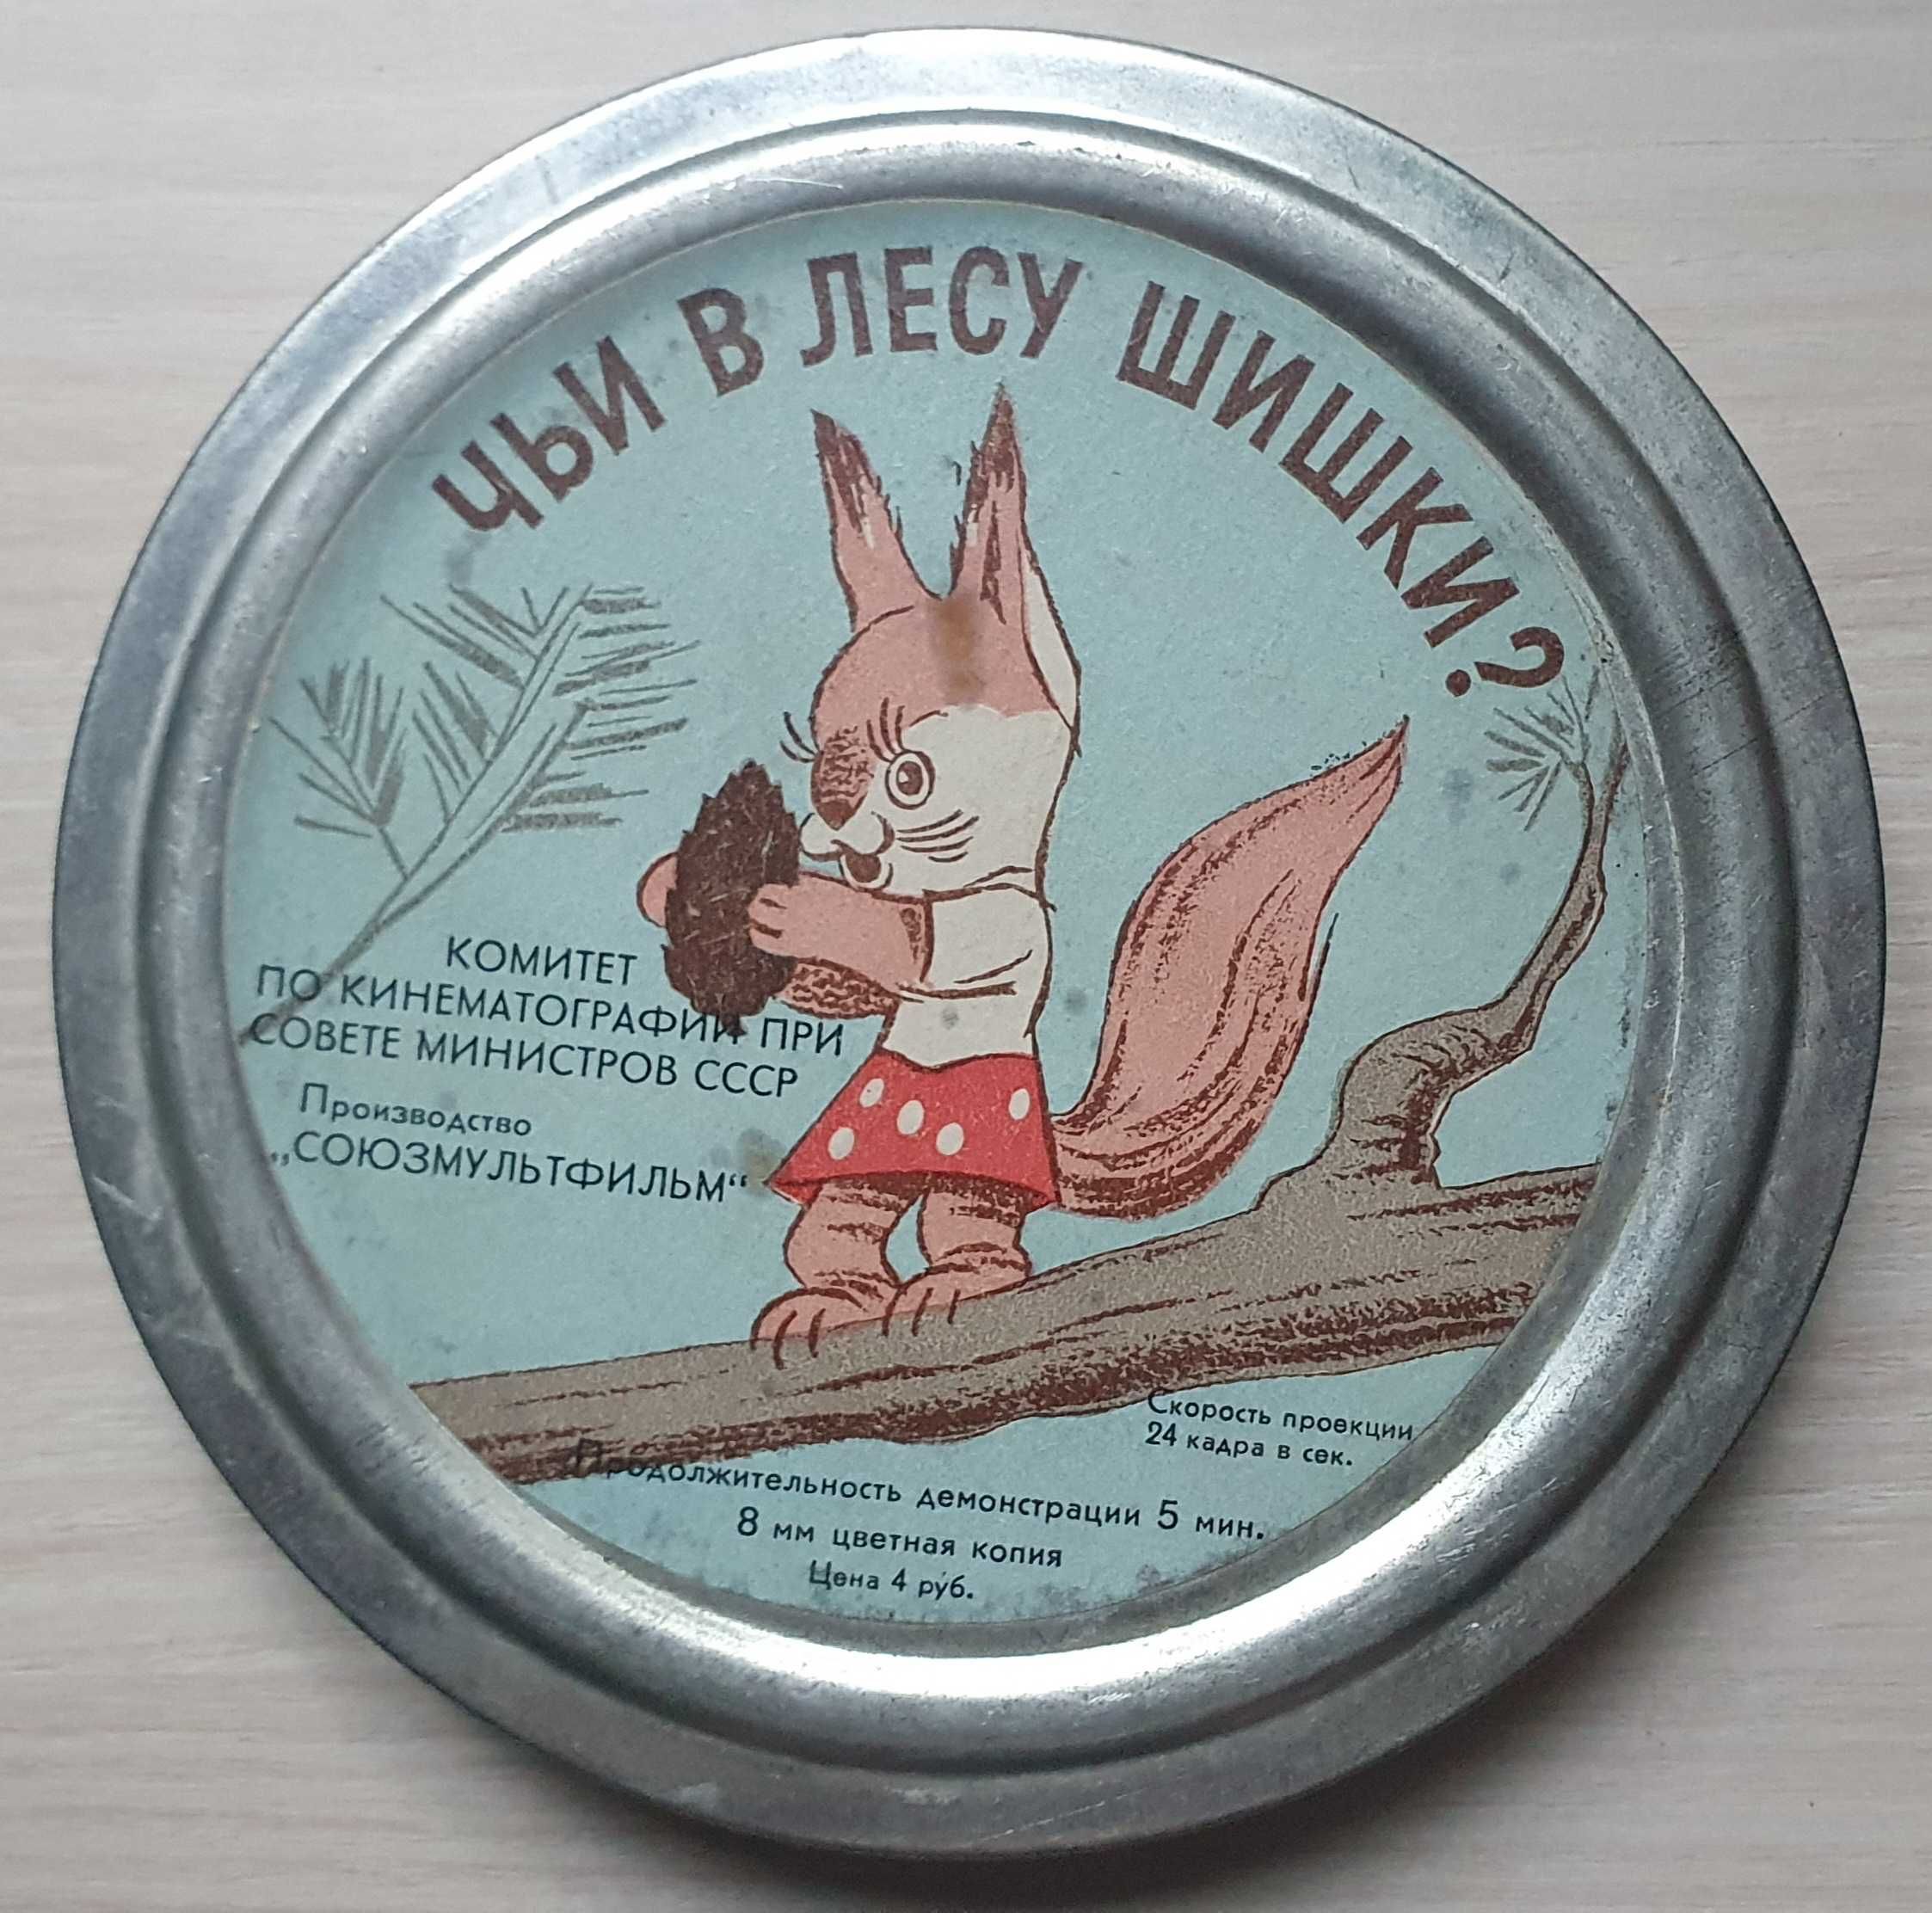 Film de animatie rusesc - URSS - color 8mm